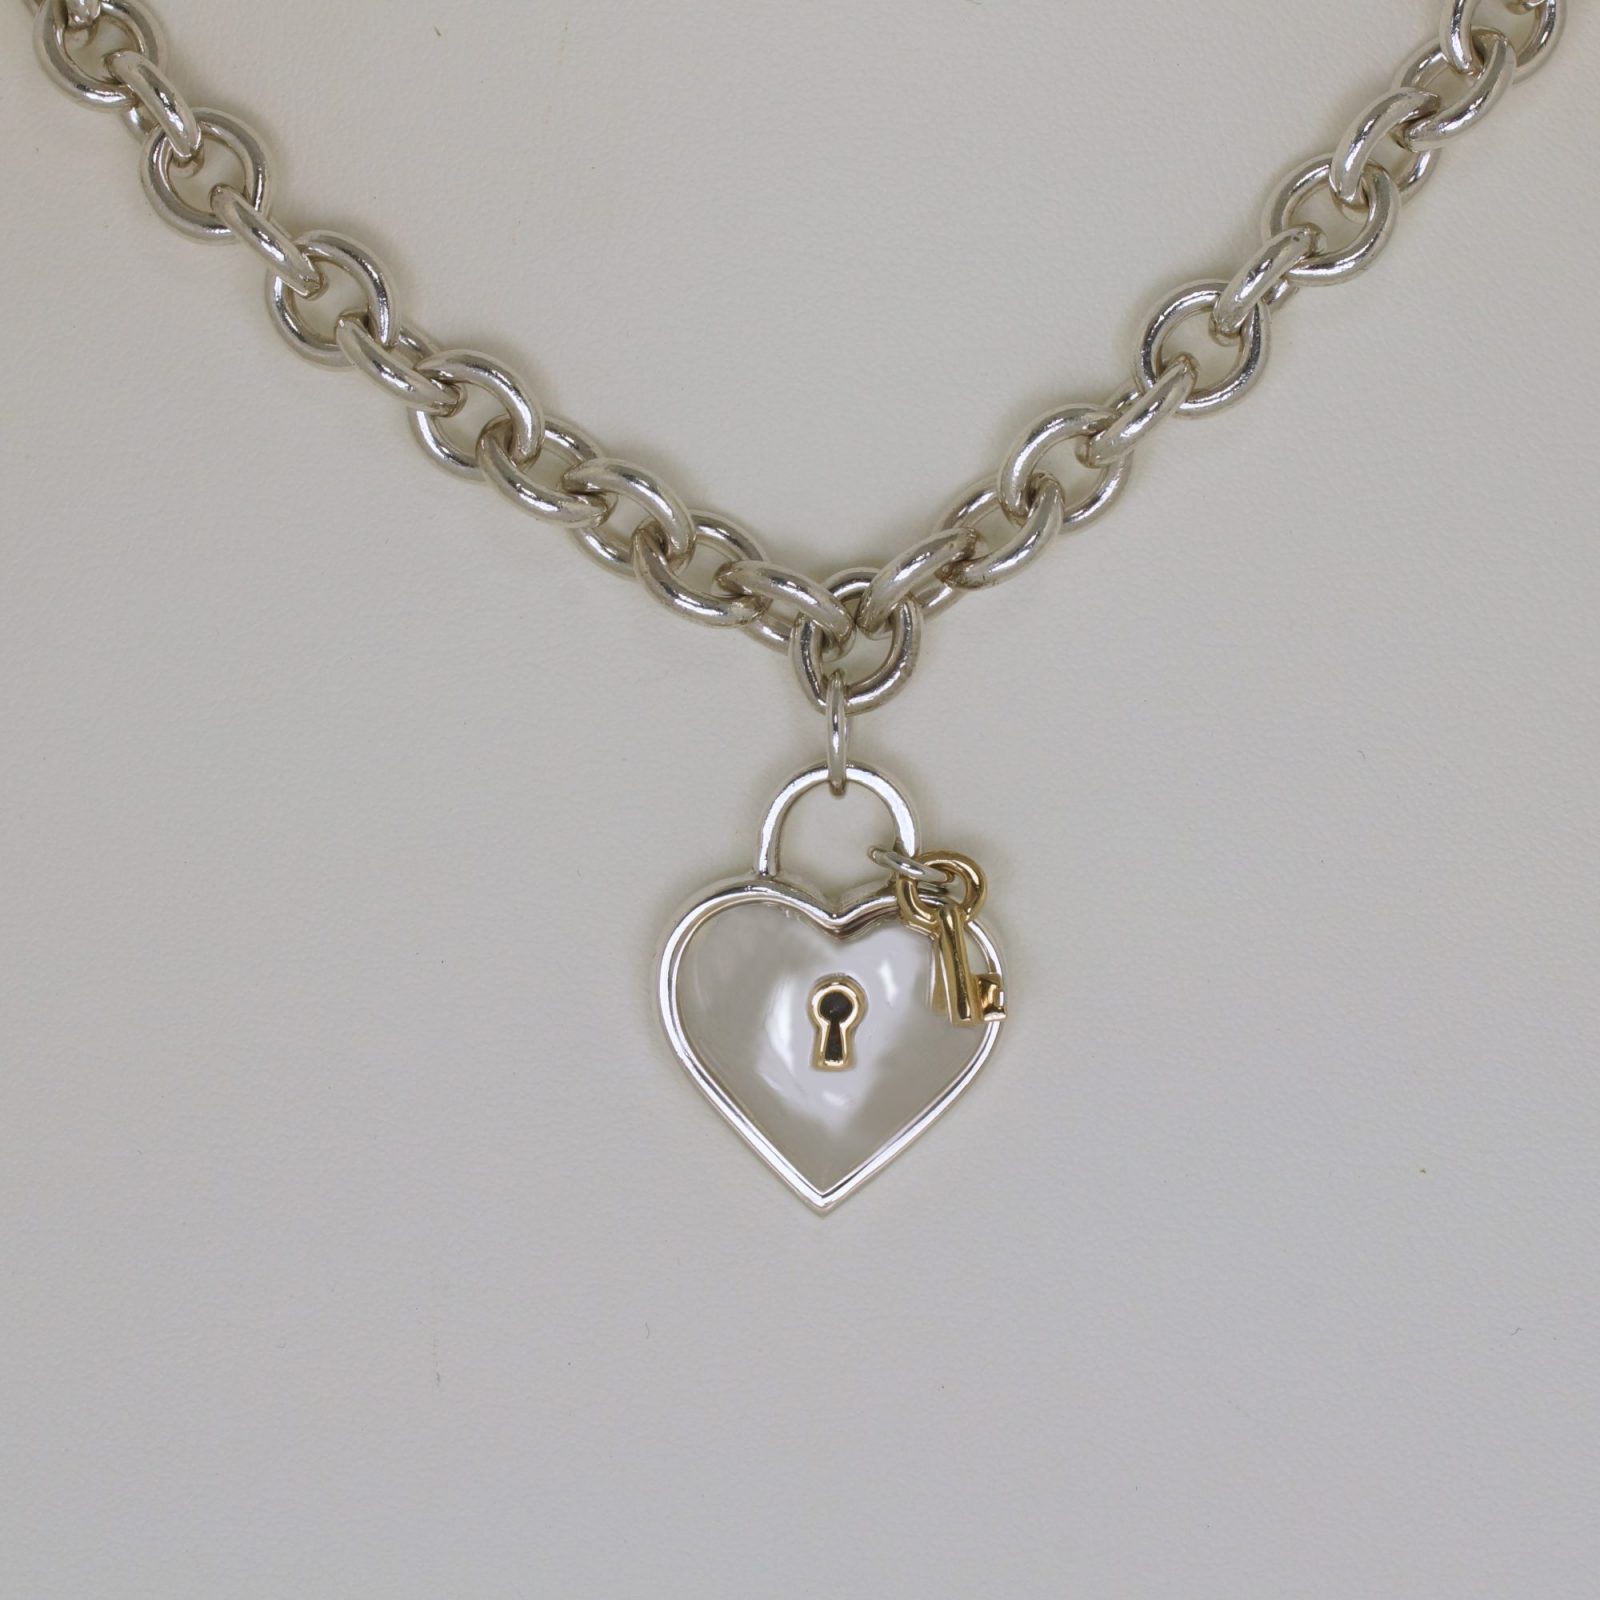 Tiffany Necklace Love Lock and Gold Key